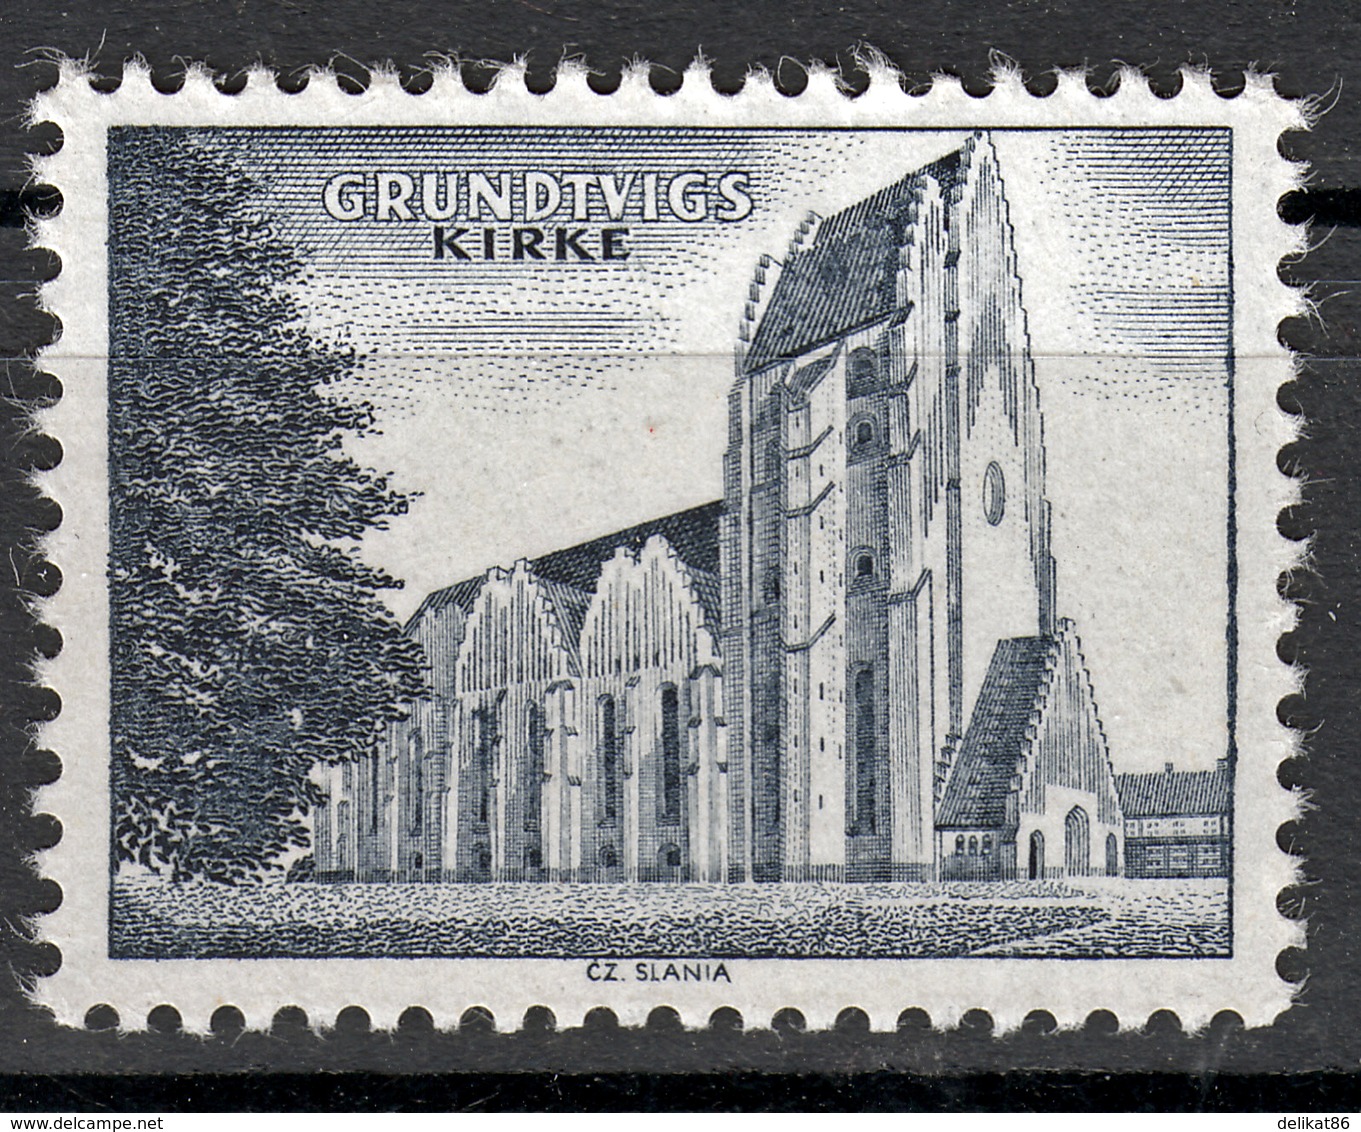 Probedruck, Test Stamp, Specimen, Prove, Grundtvigs Kirke, Slania 1968 - Proofs & Reprints